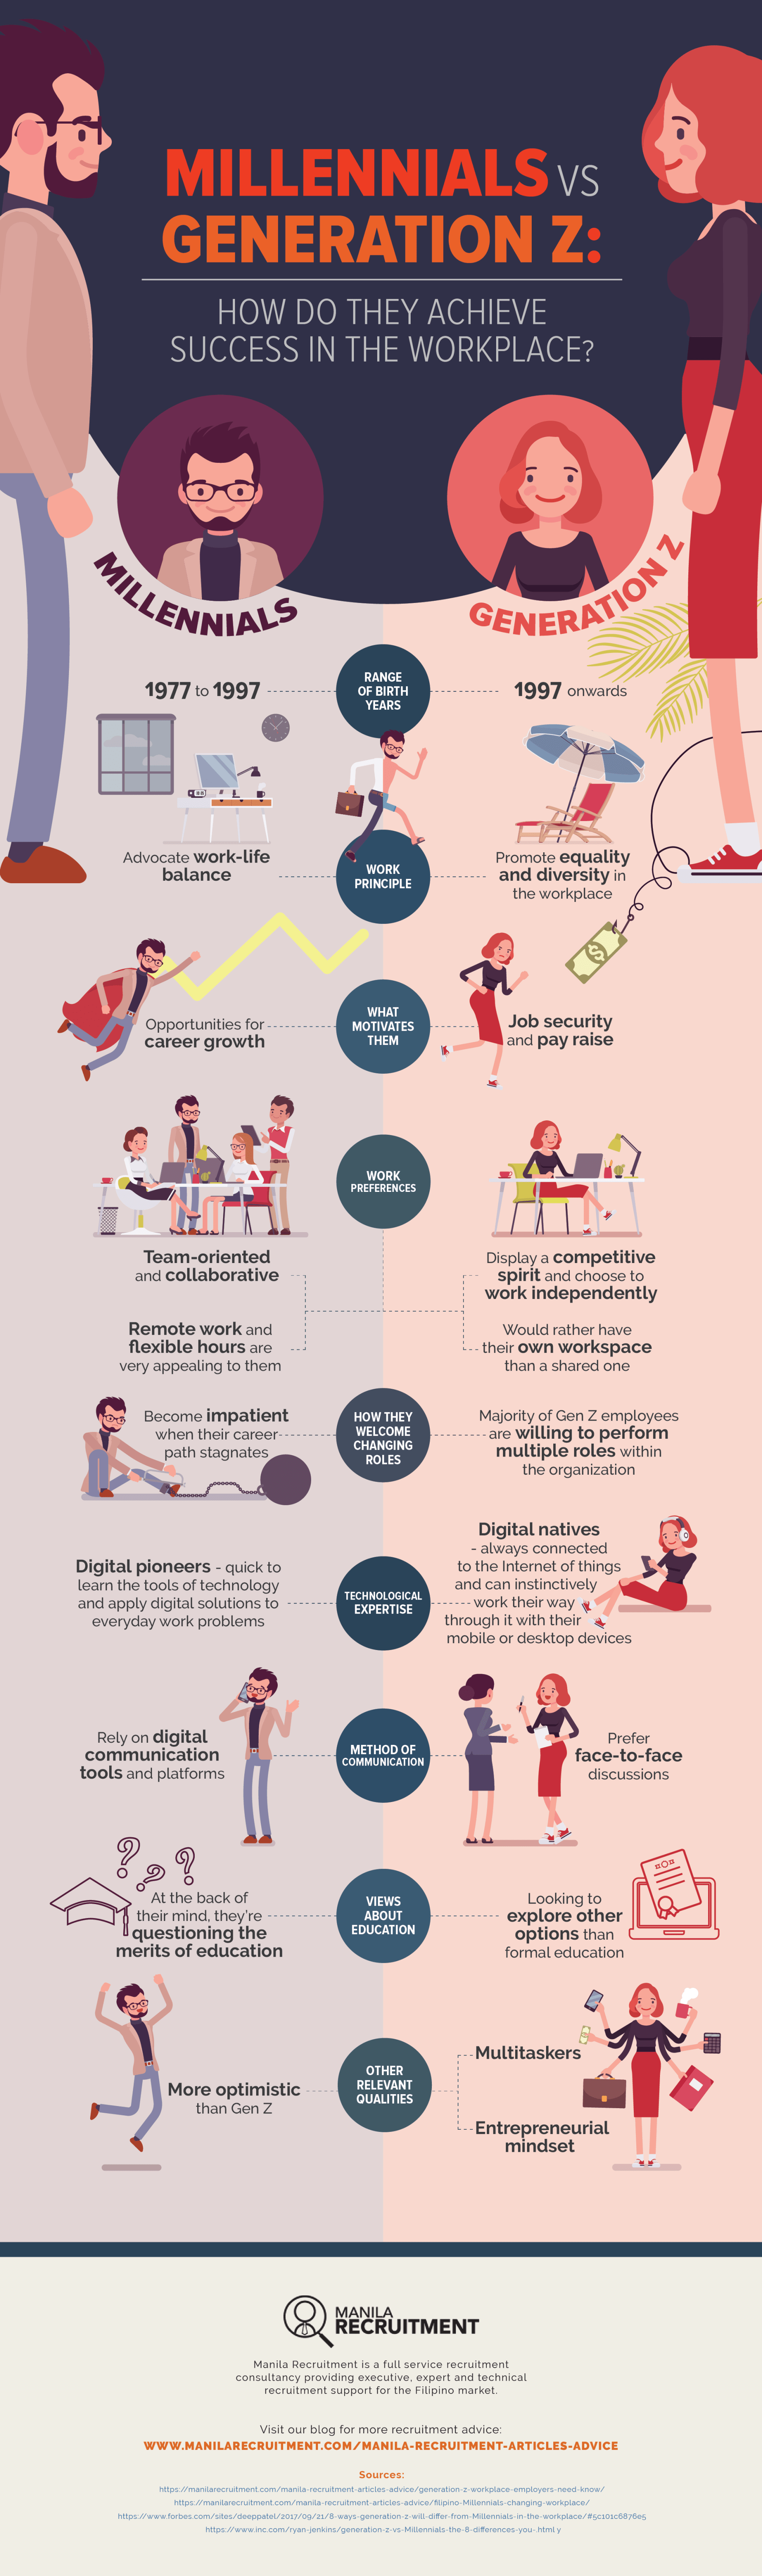 Millenials vs Gen Z success in the work place infographic